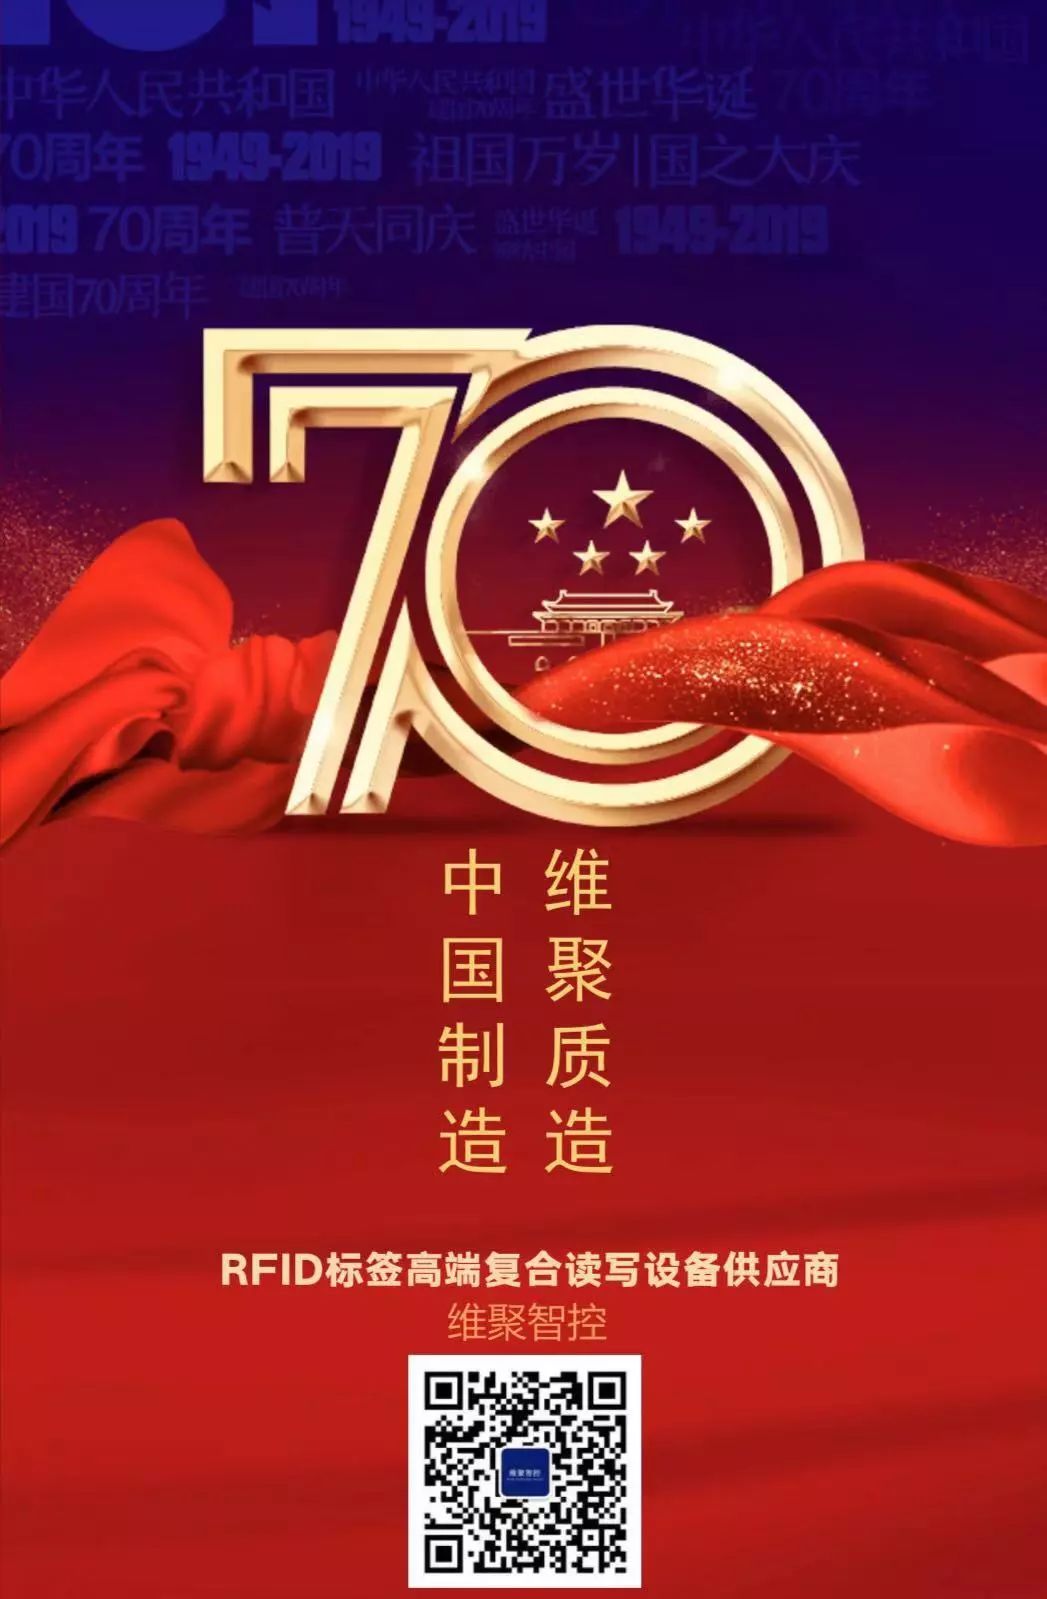 I wish the great motherland prosperity and happy 70th birthday!